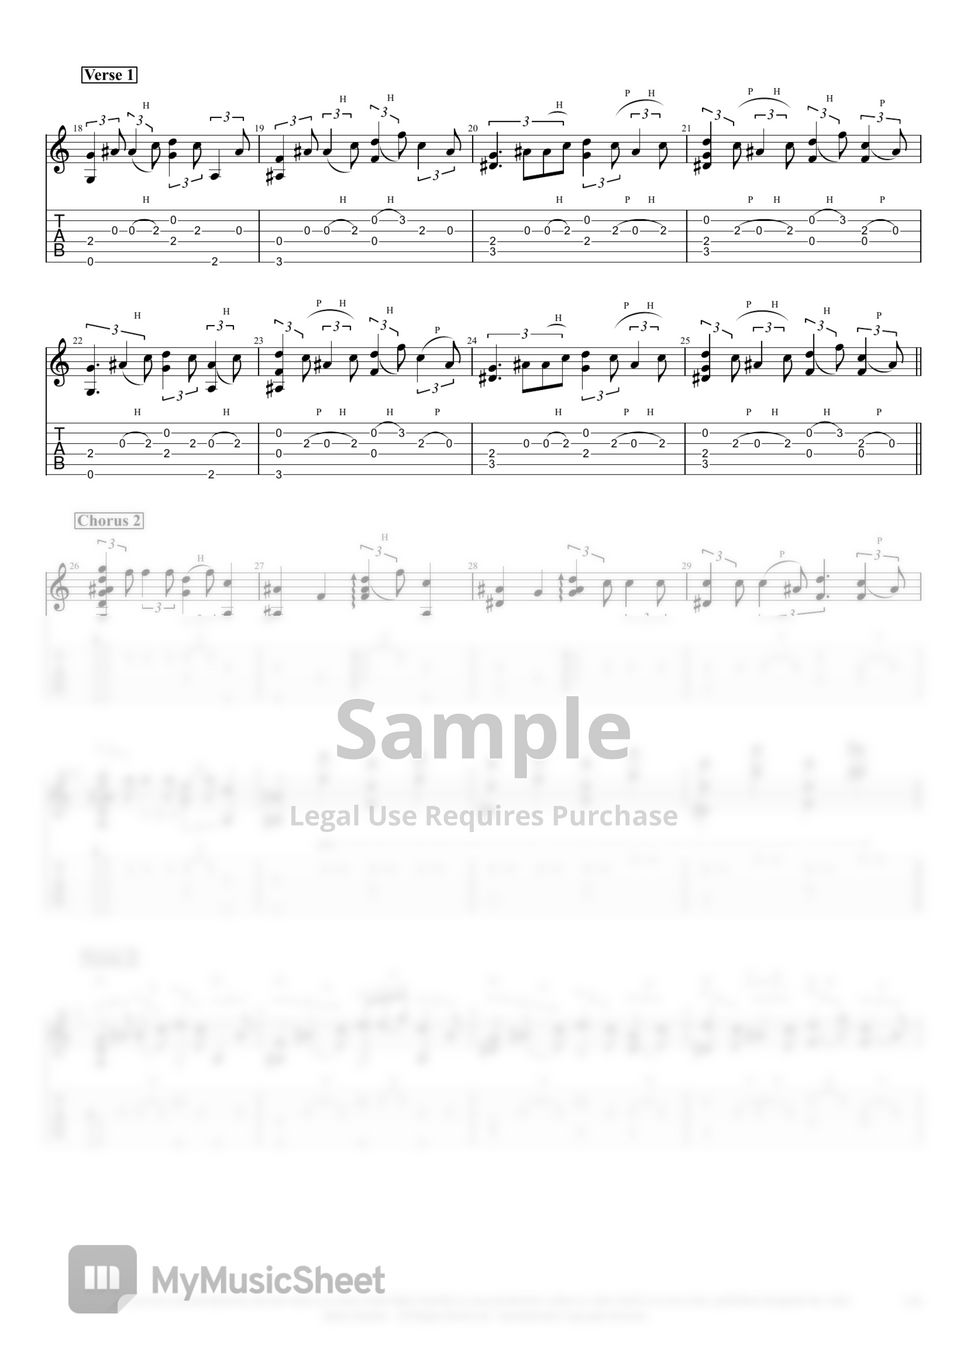 Lukas Graham - 7 Years (Fingerstyle guitar arrangement) by Iqbal Gumilar